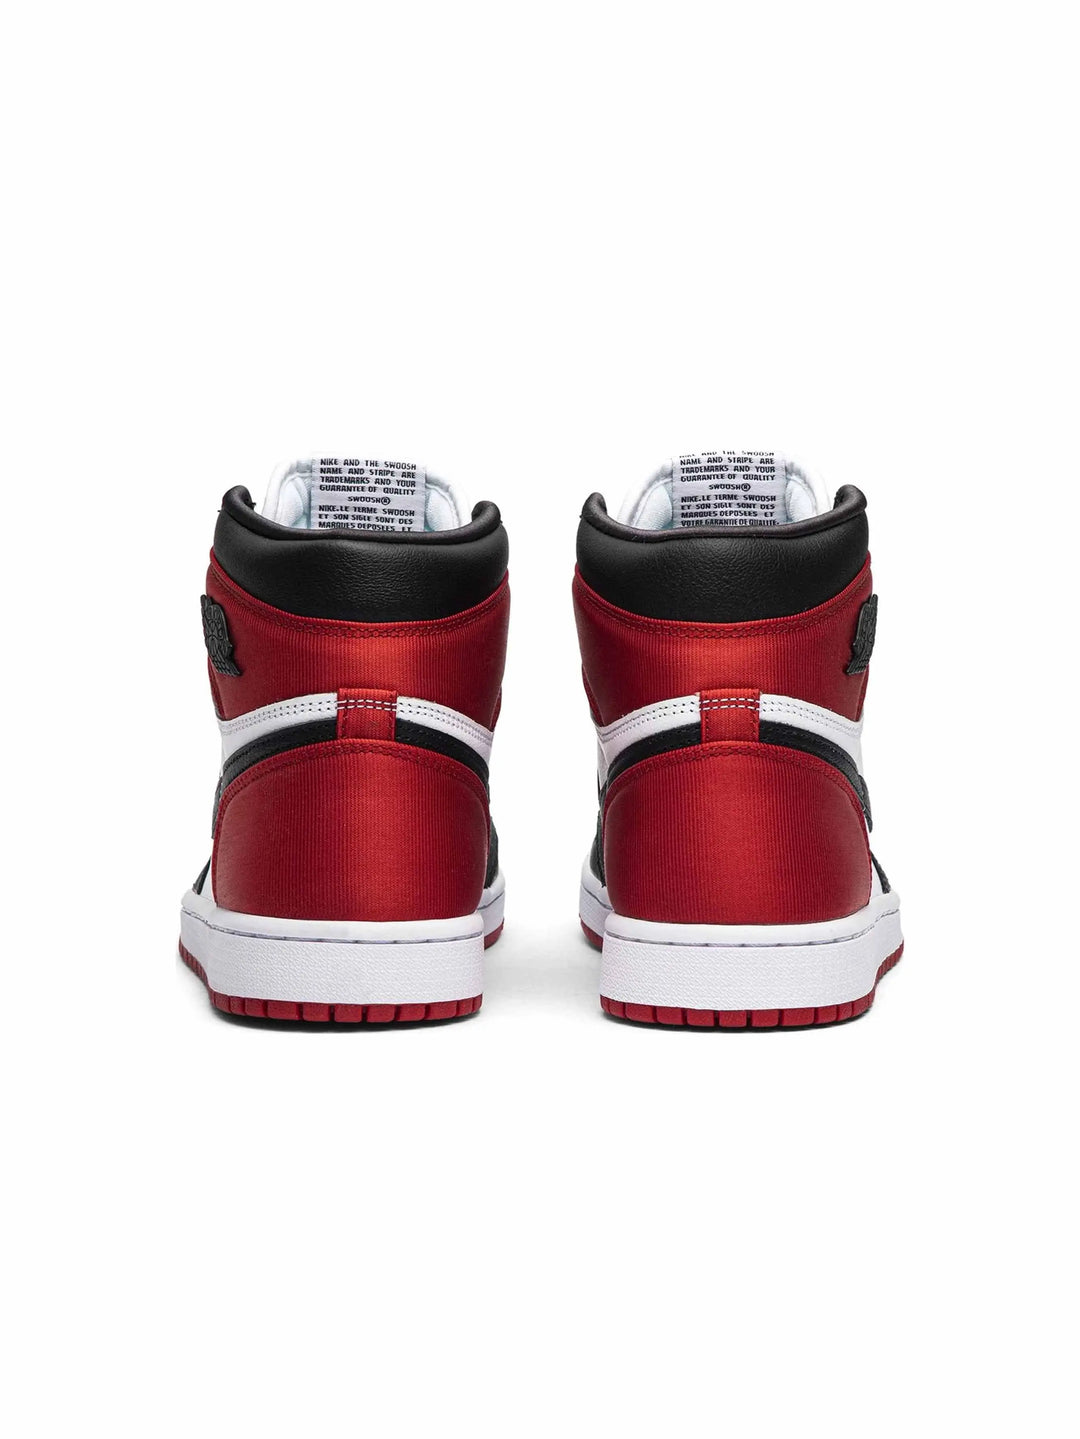 Nike Air Jordan 1 Retro High Satin Black Toe (W) in Auckland, New Zealand - Shop name